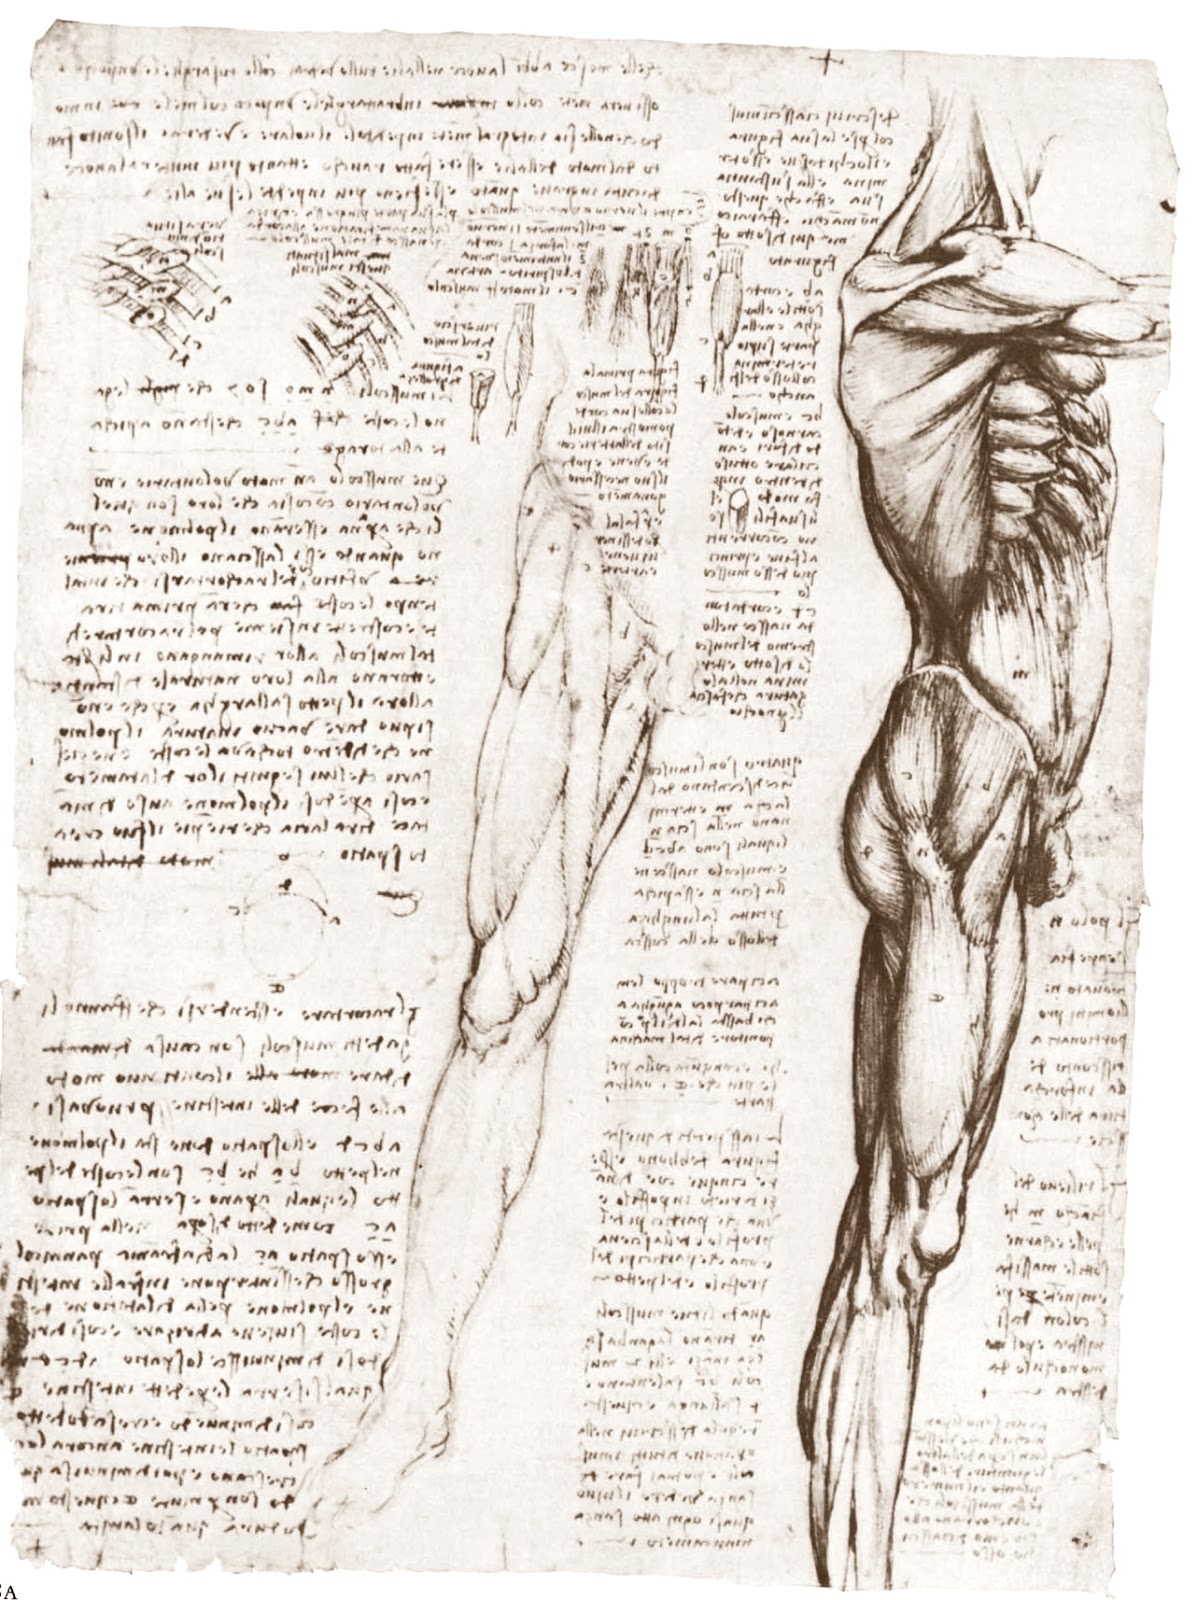 Leonardo+da+Vinci-1452-1519 (795).jpg